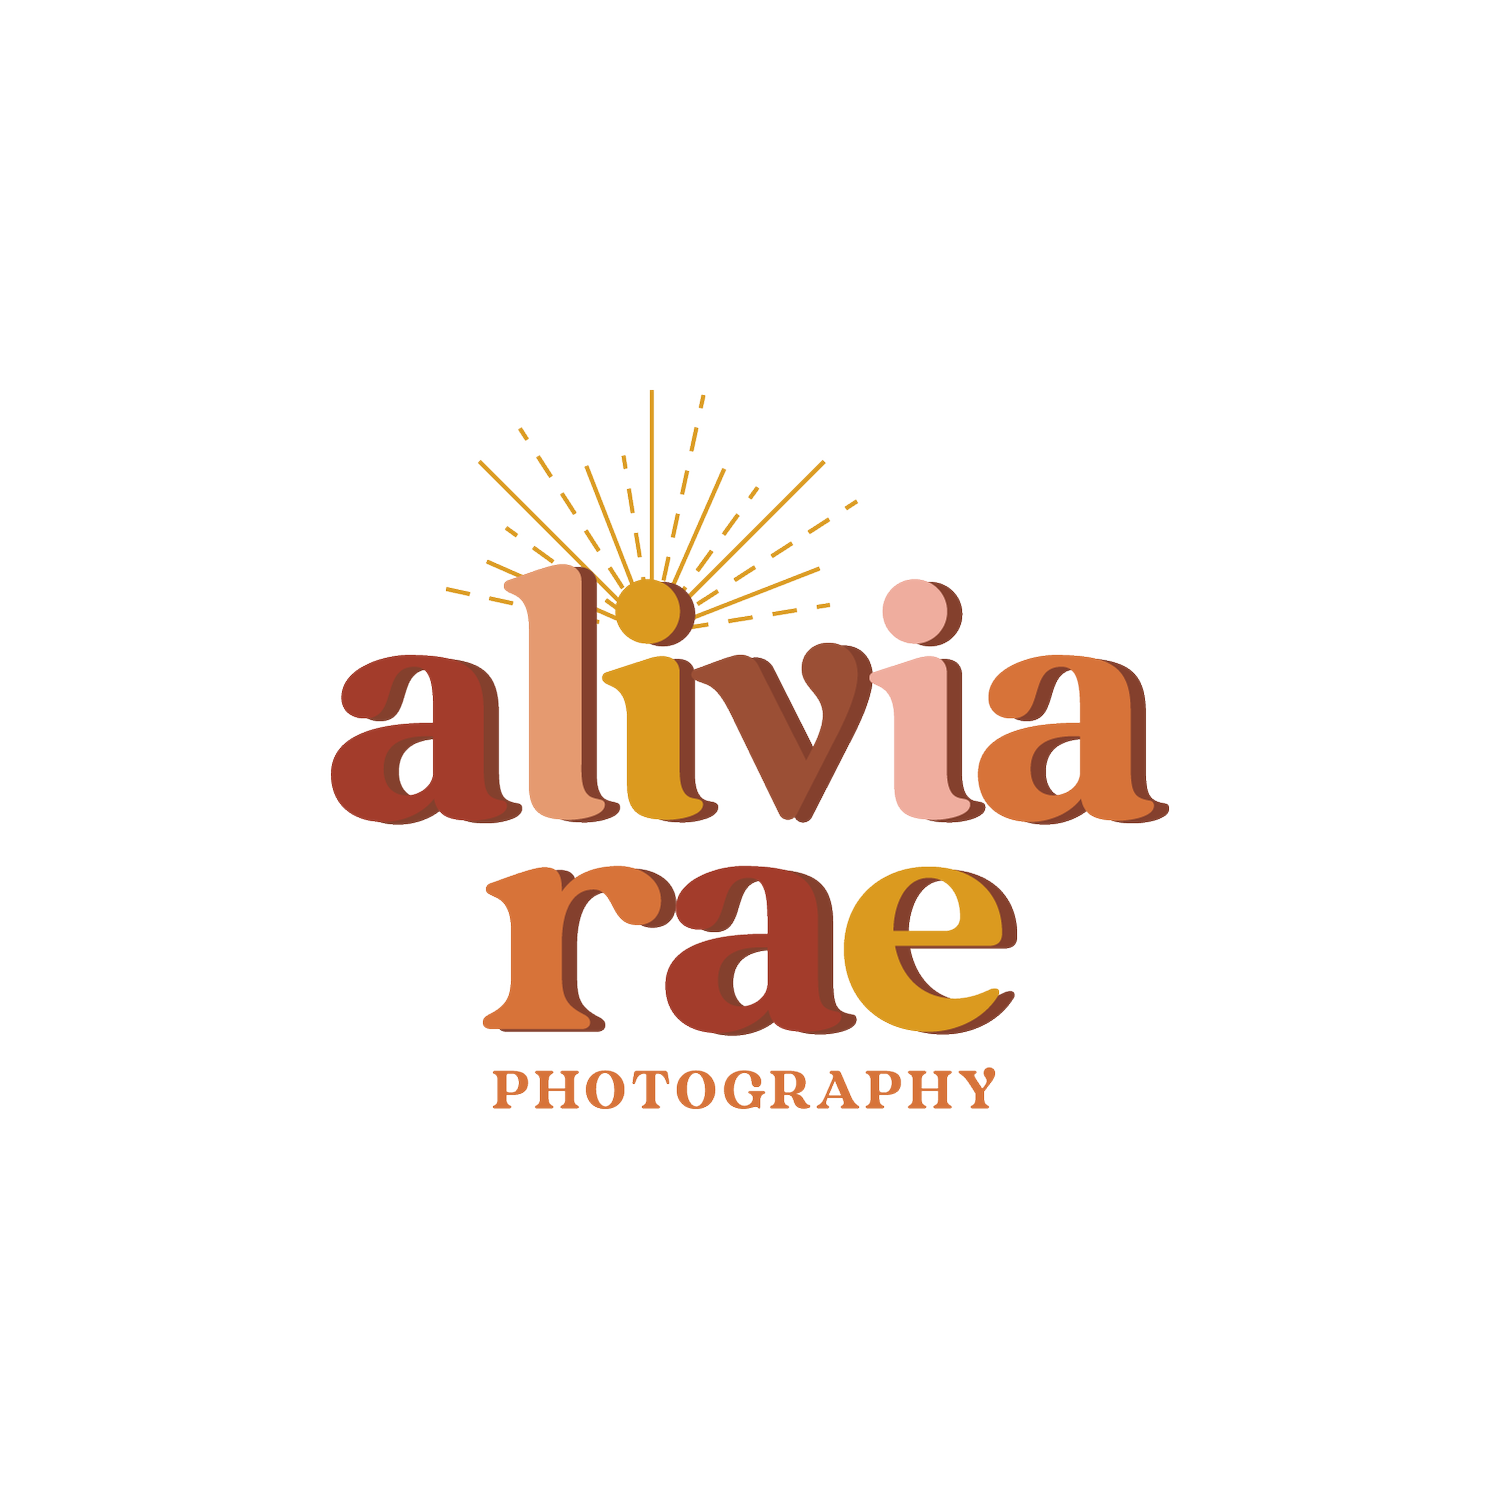 Alivia Rae Photography